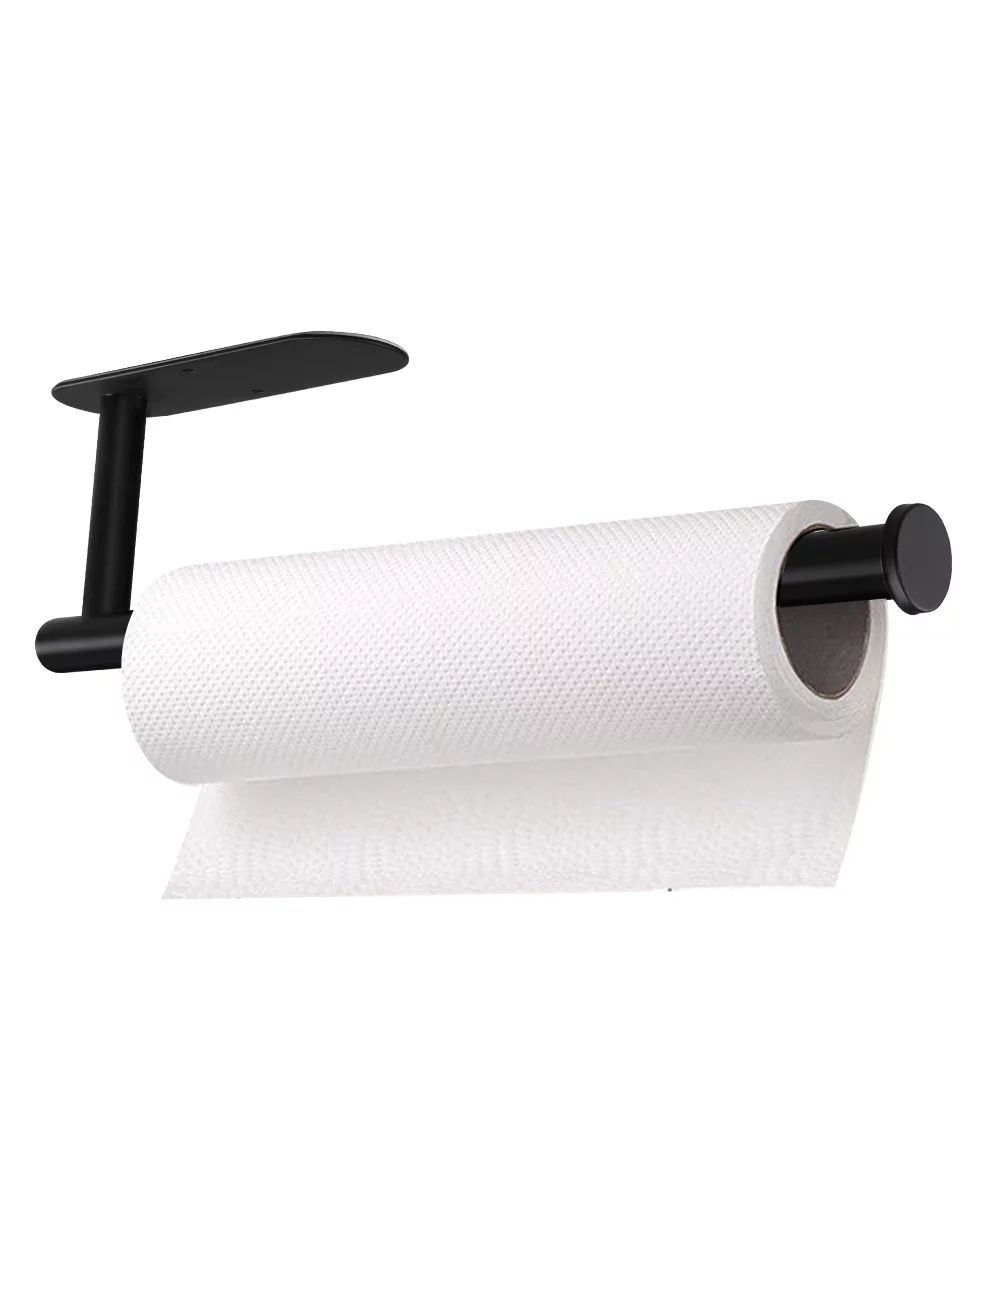 Koovon Paper Towel Holder Wall Mount, Self-Adhesive Under Cabinet Paper Towel Rack for Bathroom K... | Walmart (US)